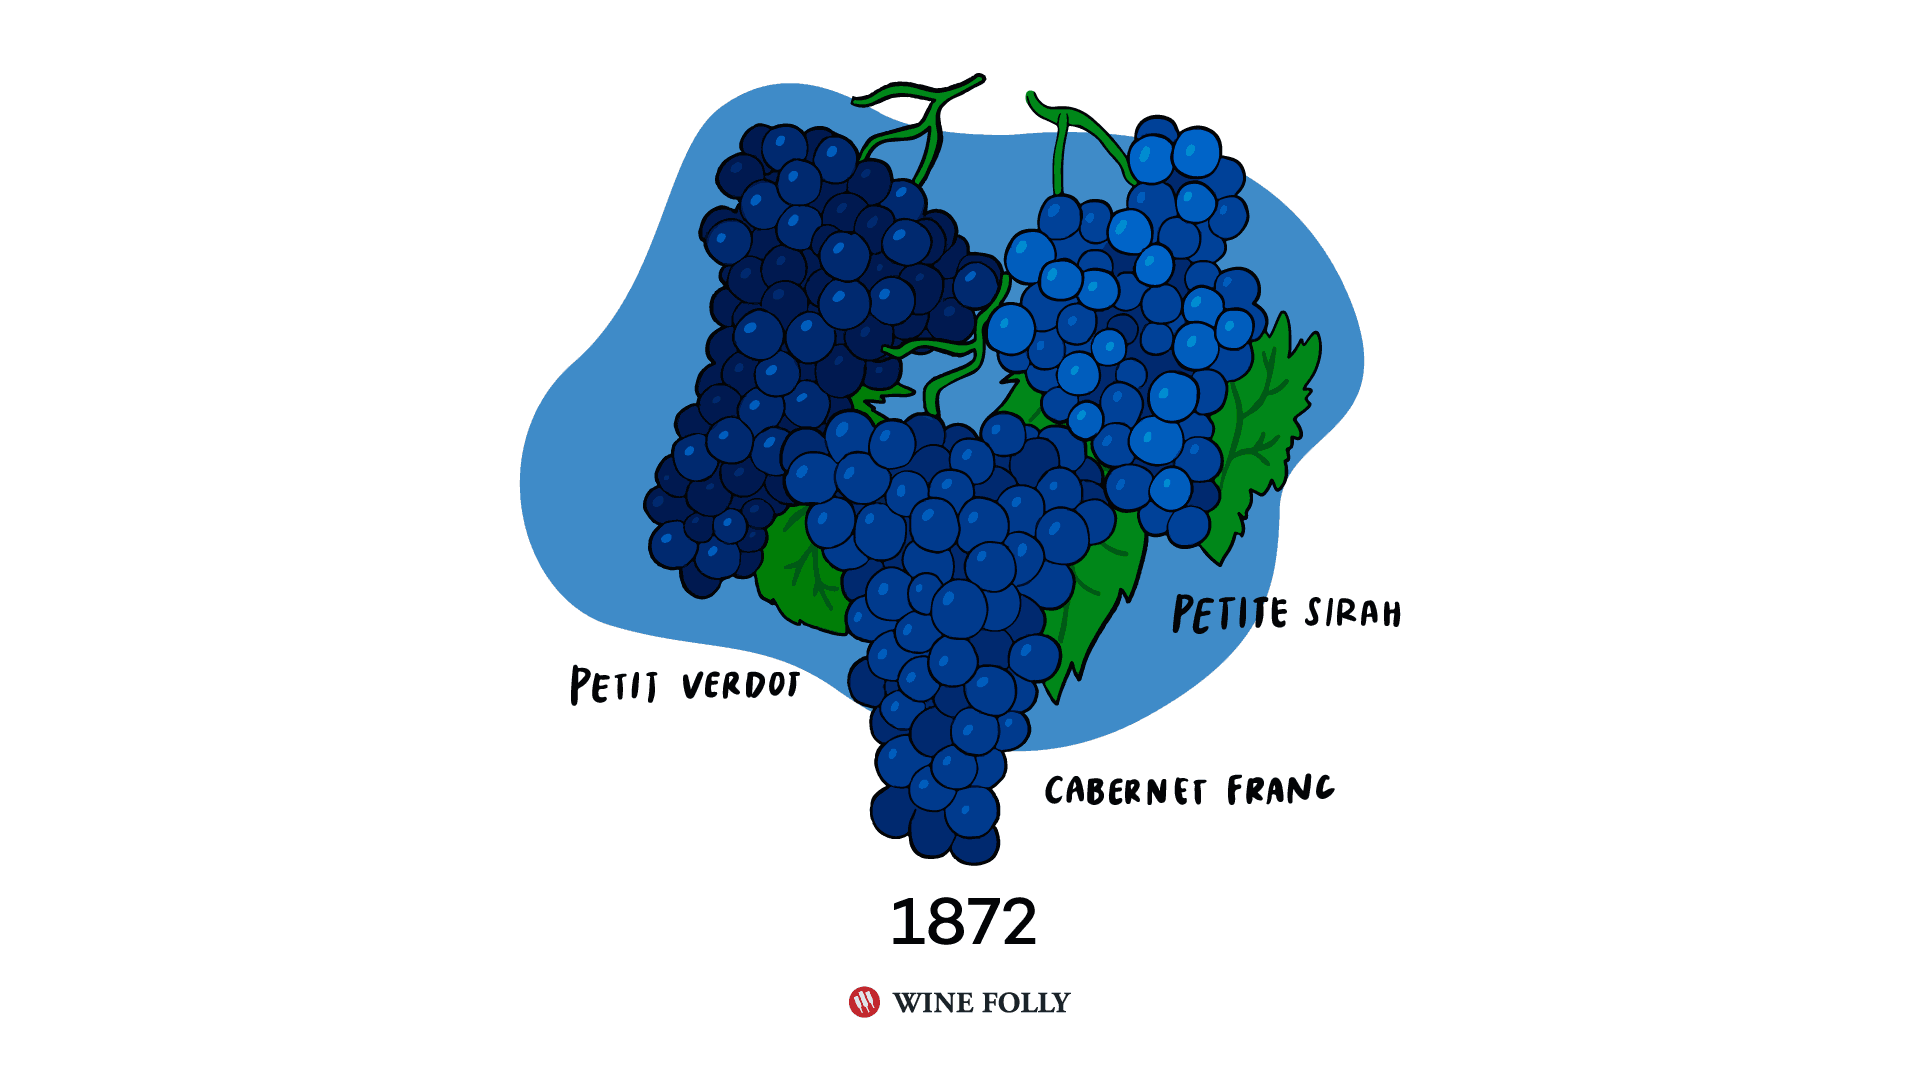 Expansion of Vineyards